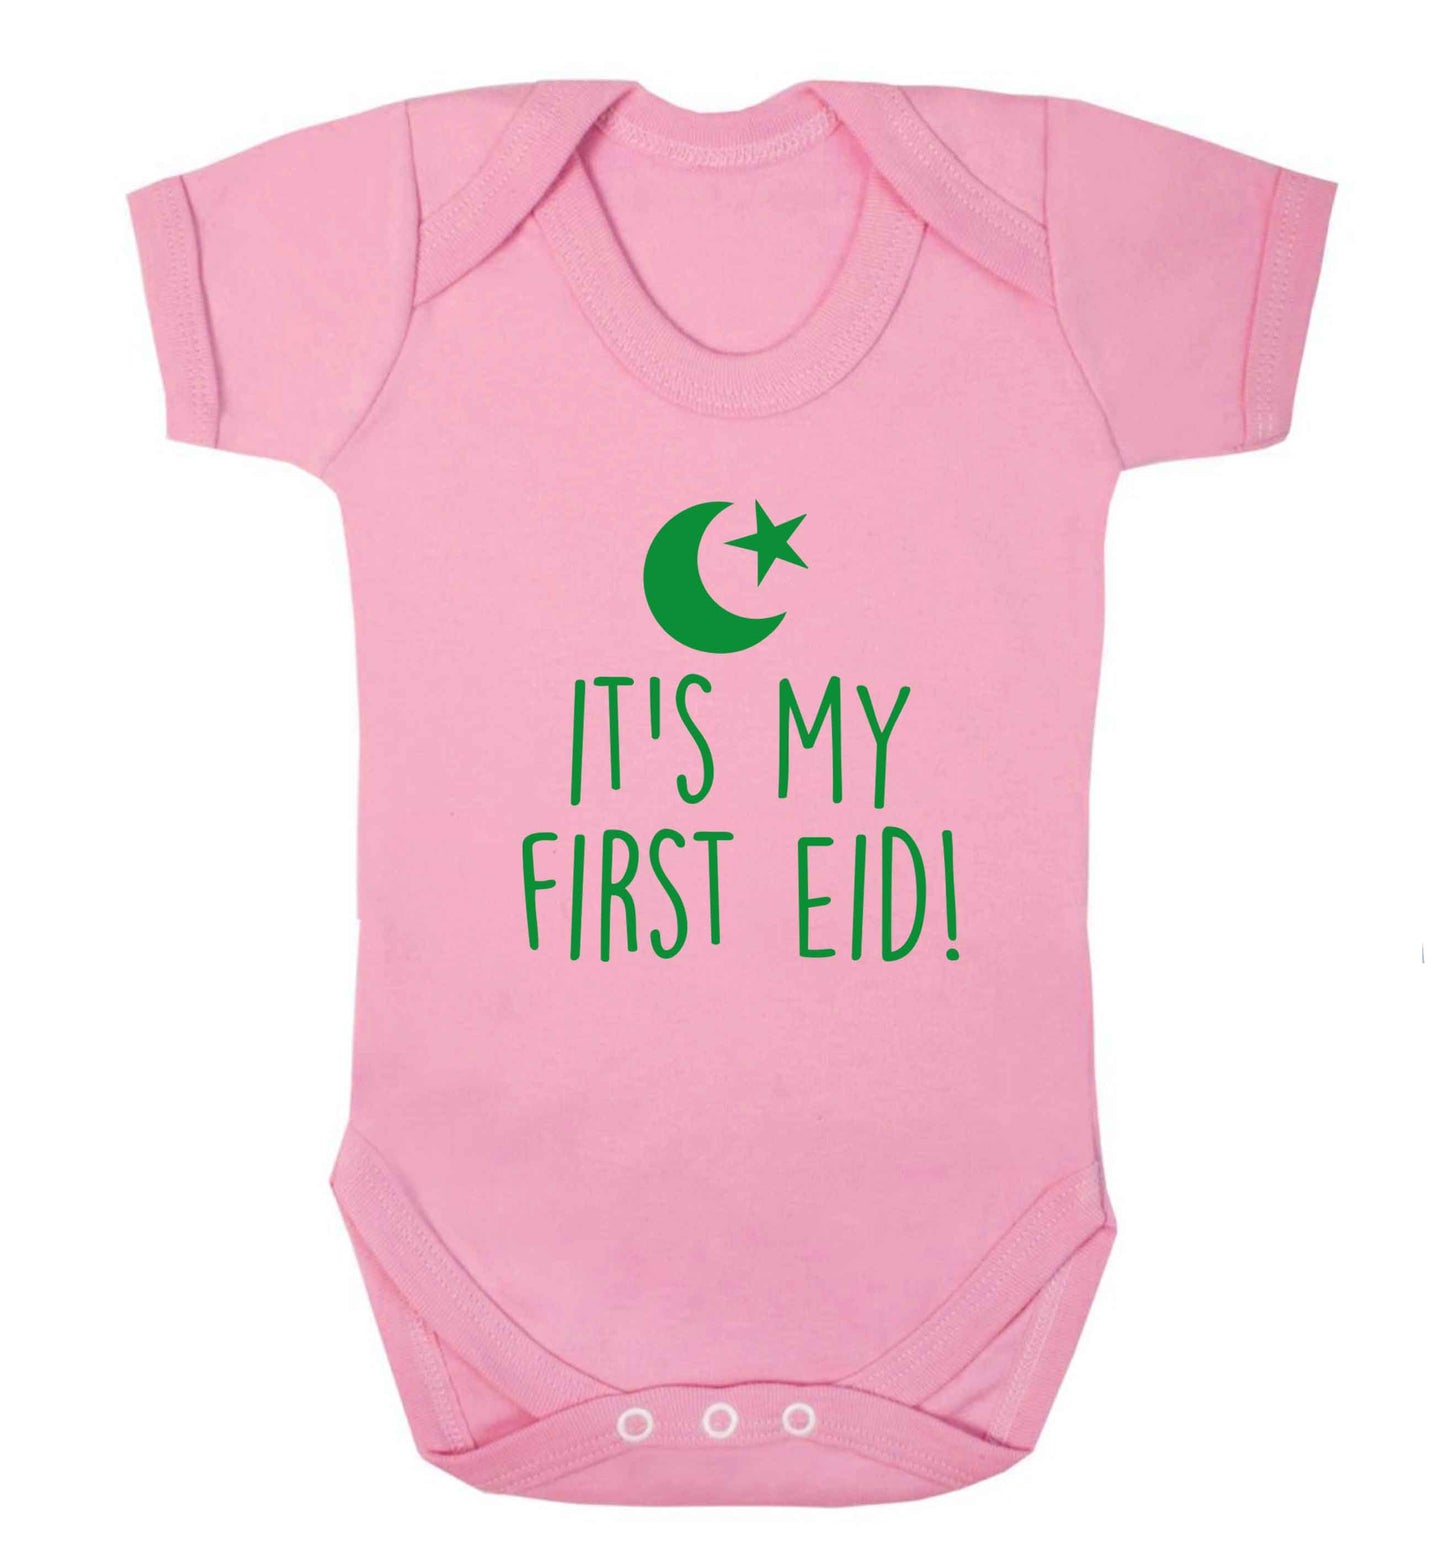 It's my first Eid baby vest pale pink 18-24 months